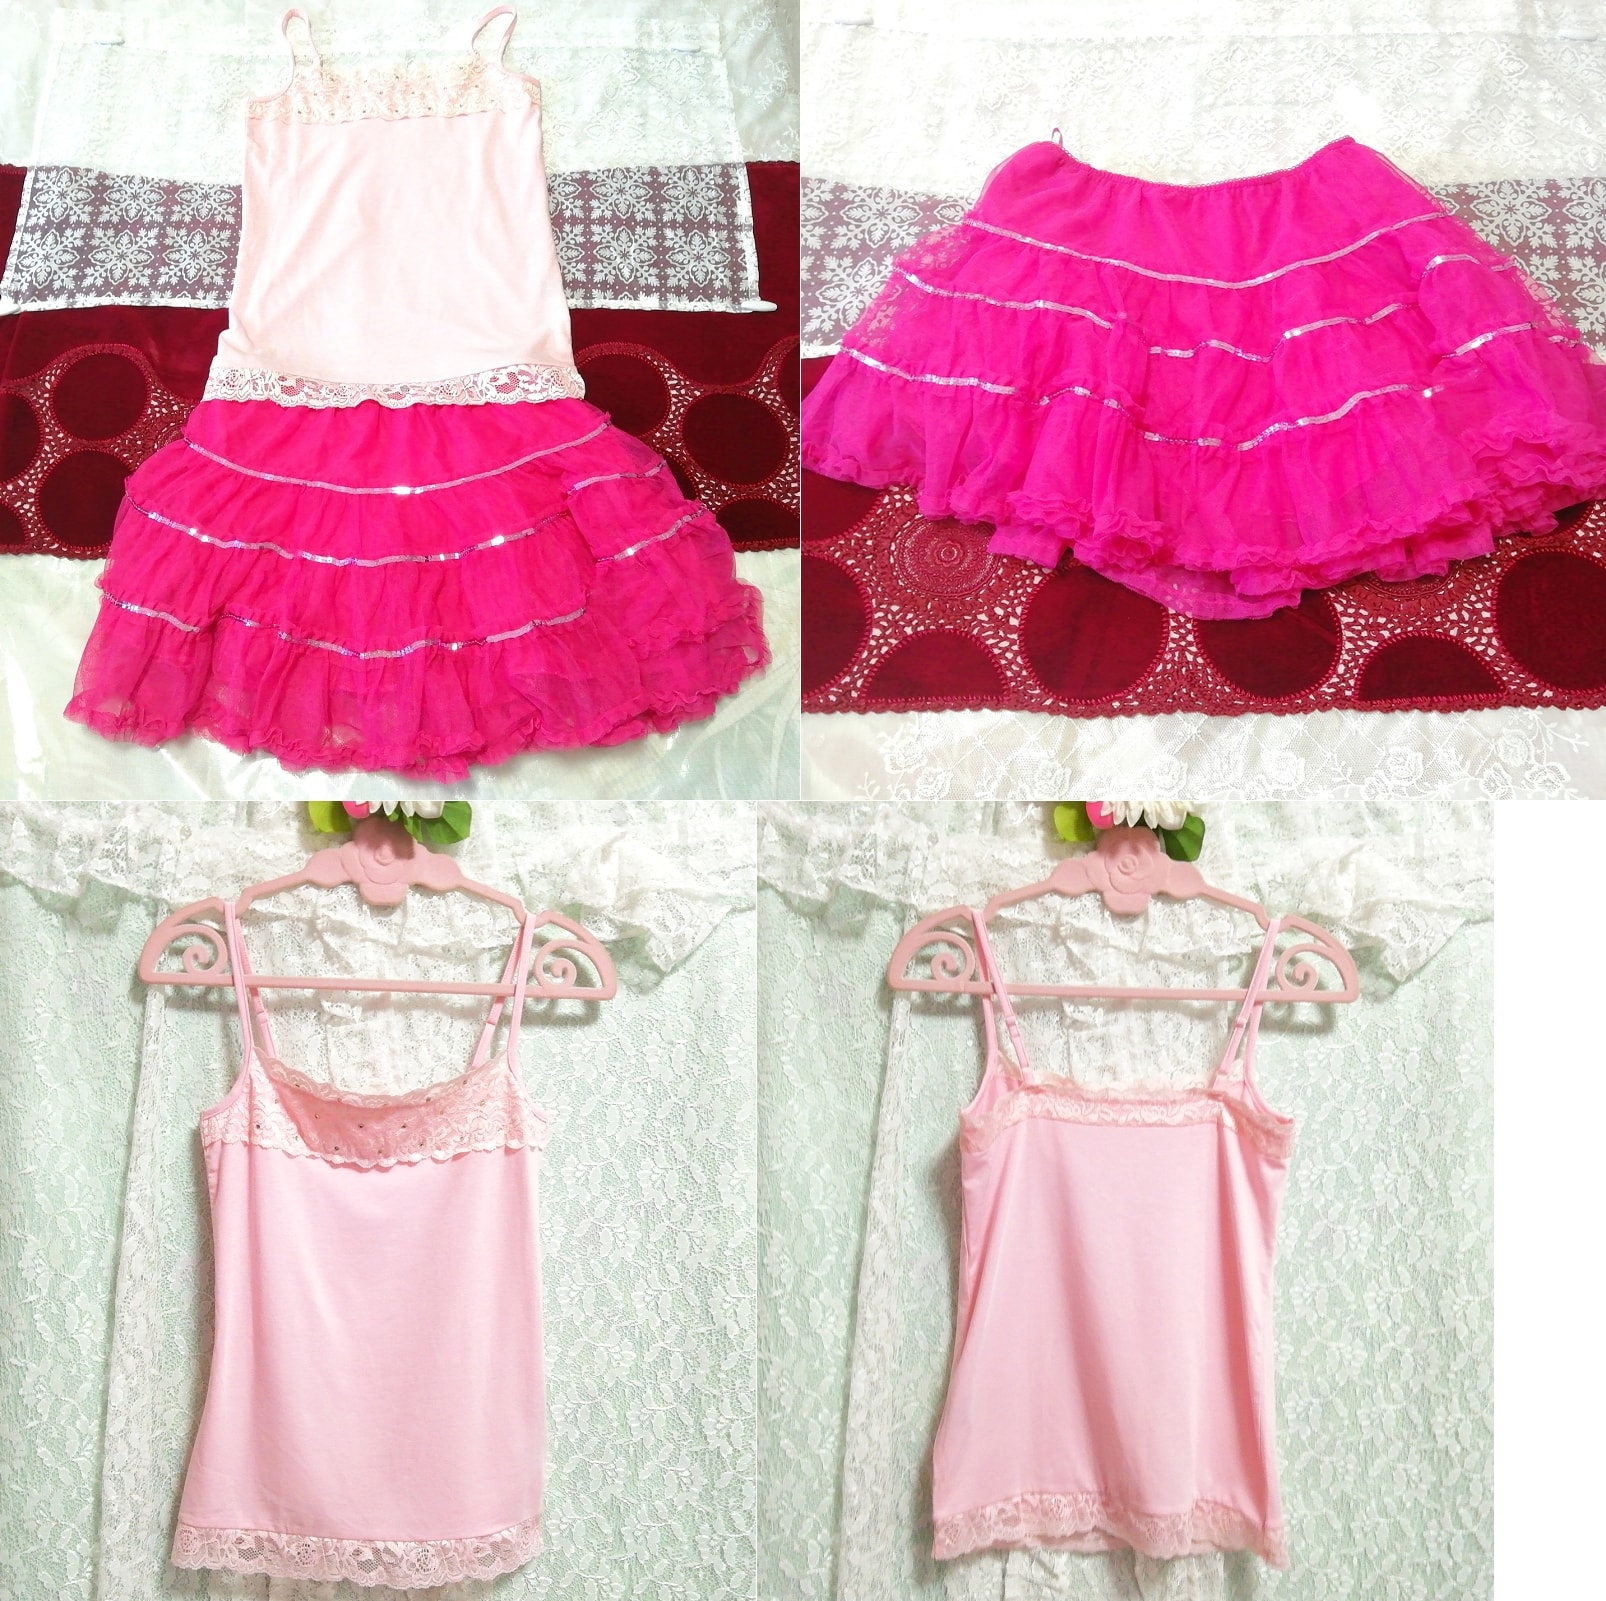 Pink lace camisole negligee nightgown magenta tutu miniskirt 2P, fashion, ladies' fashion, nightwear, pajamas